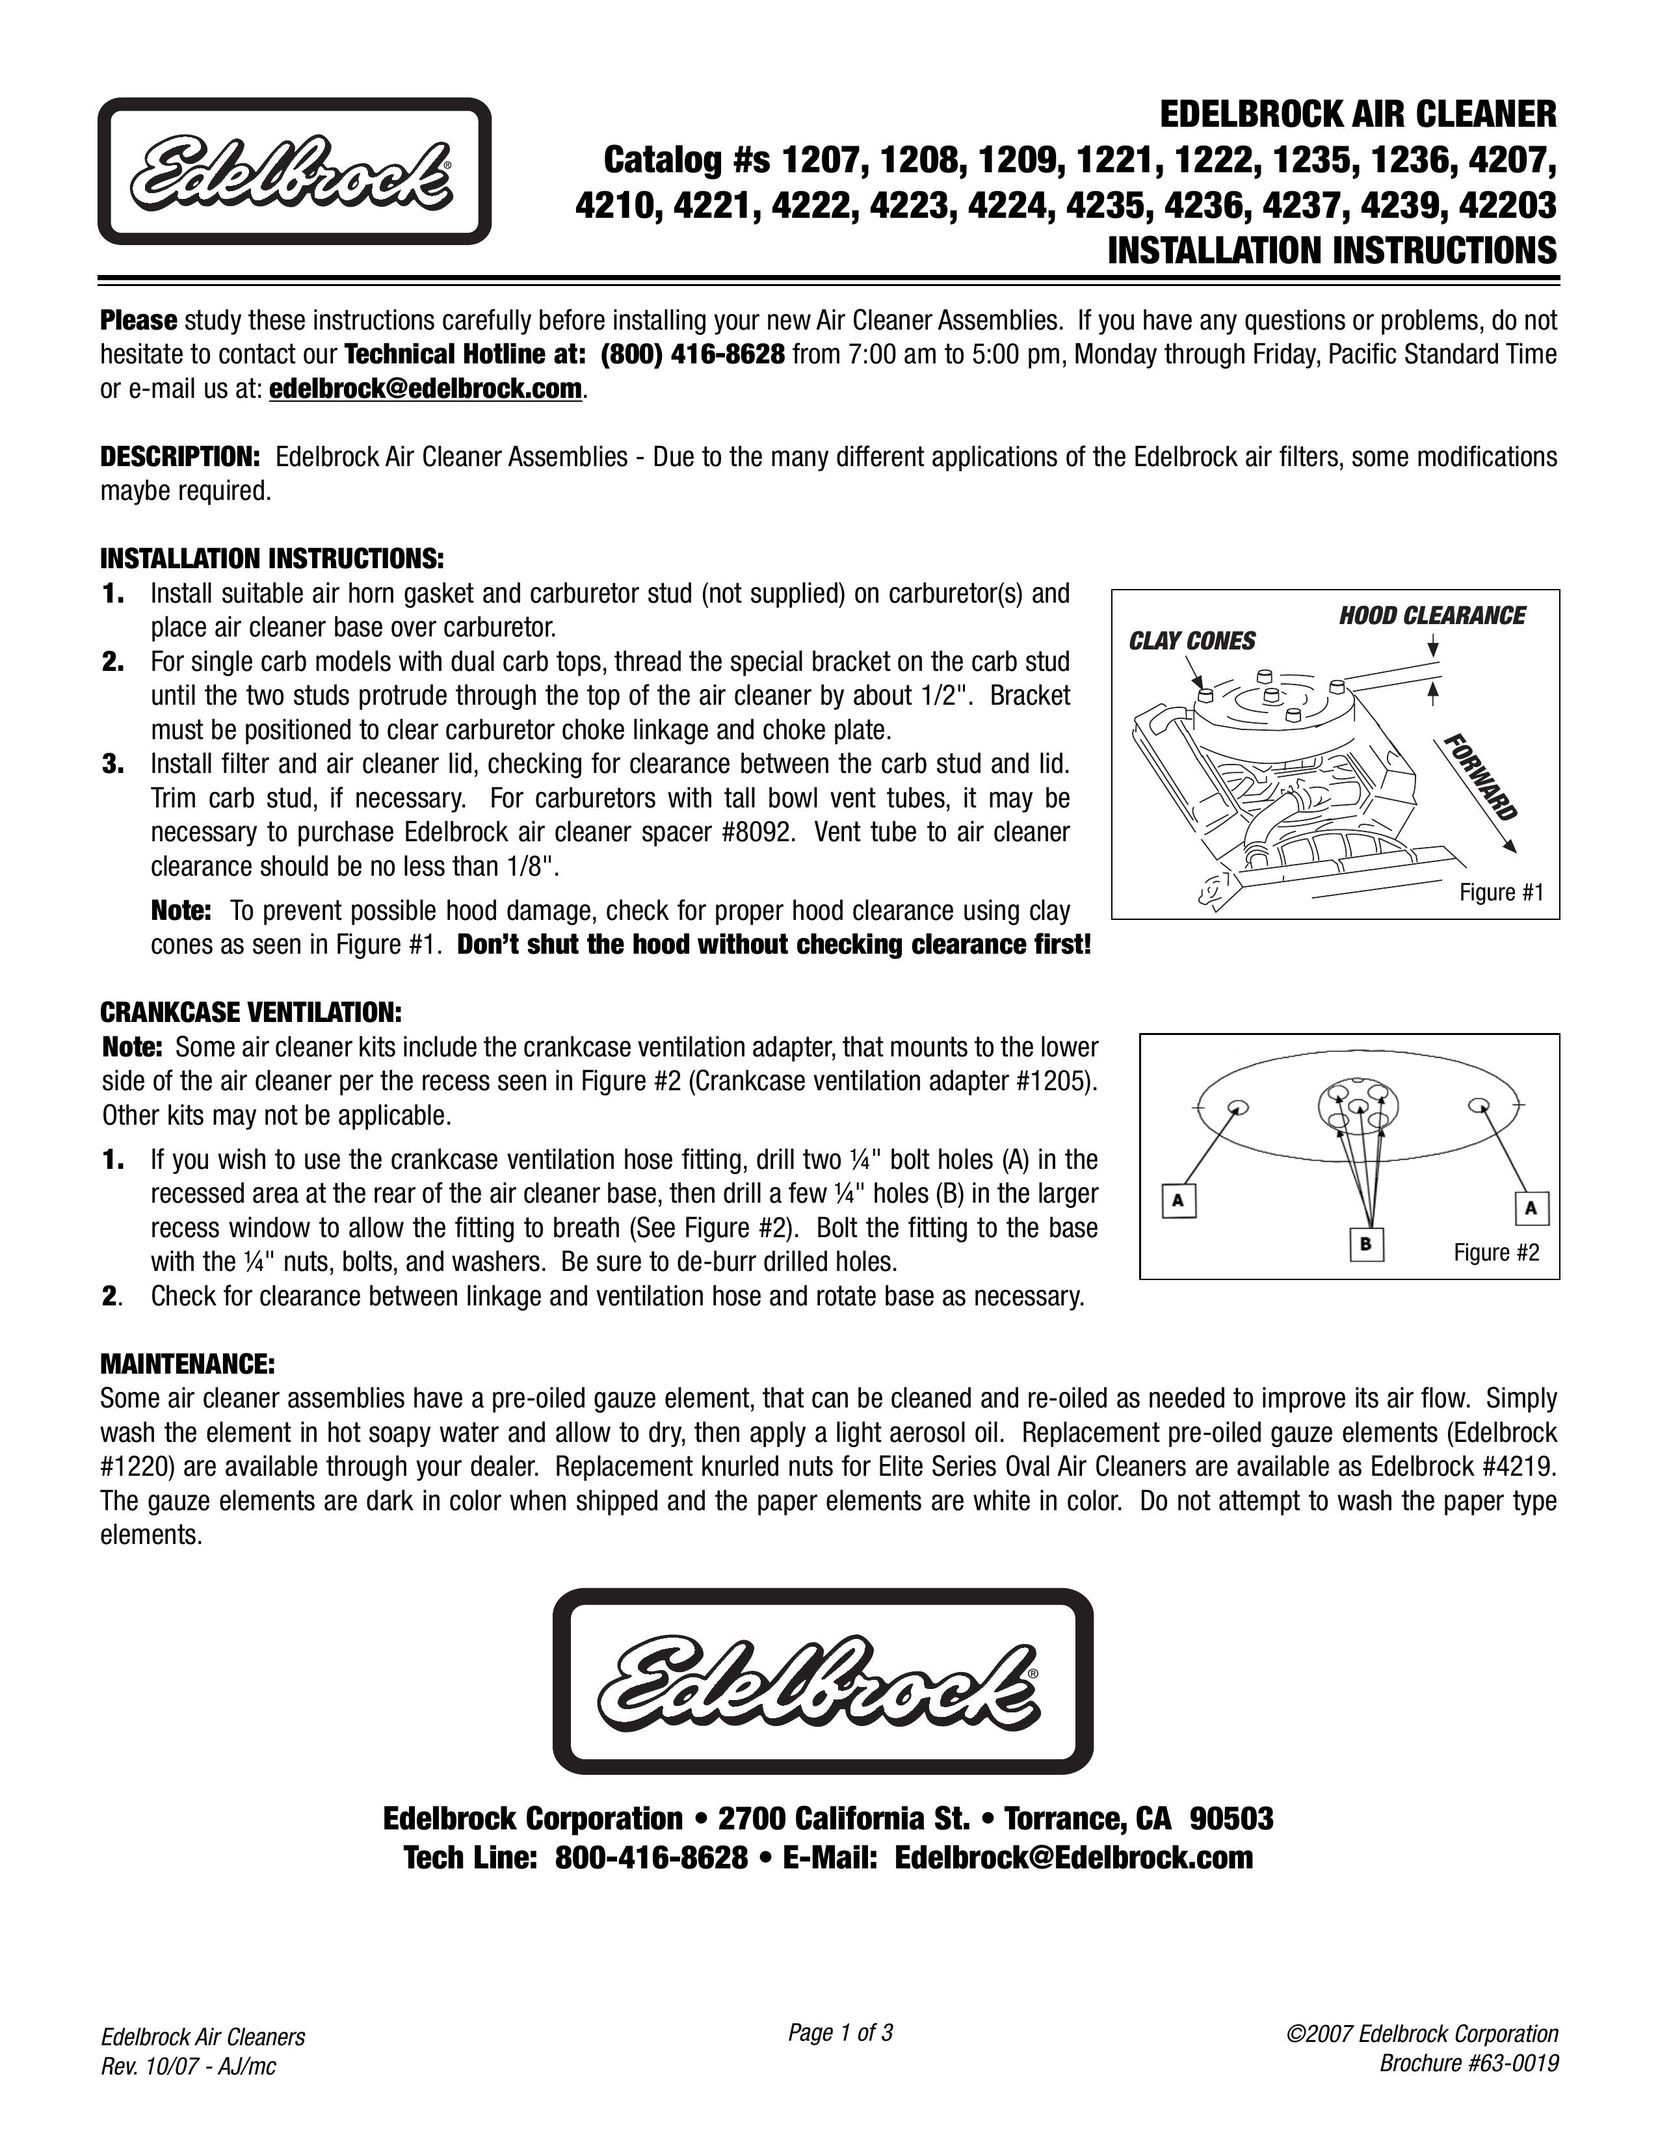 Edelbrock 1236 Air Cleaner User Manual